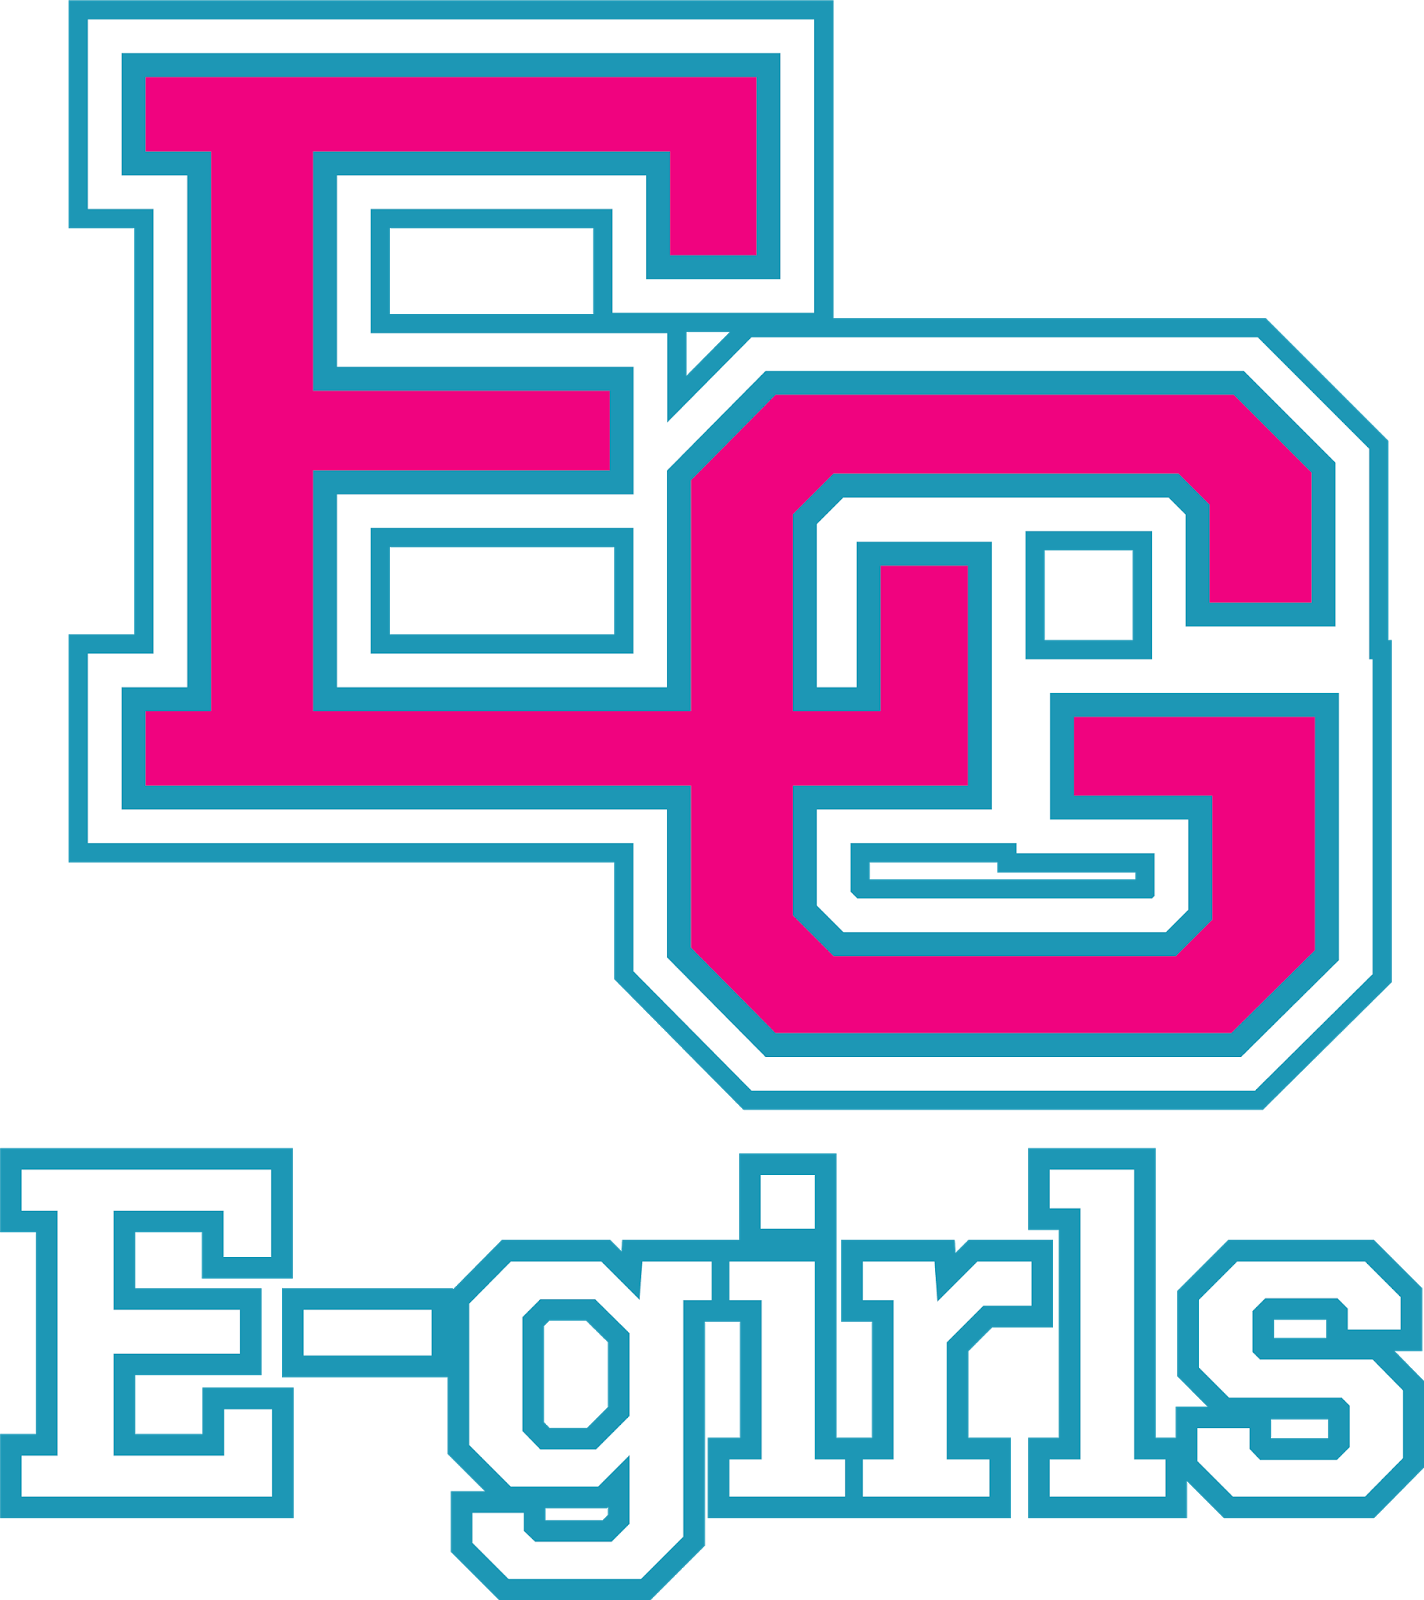 50 E Girls ロゴ 壁紙